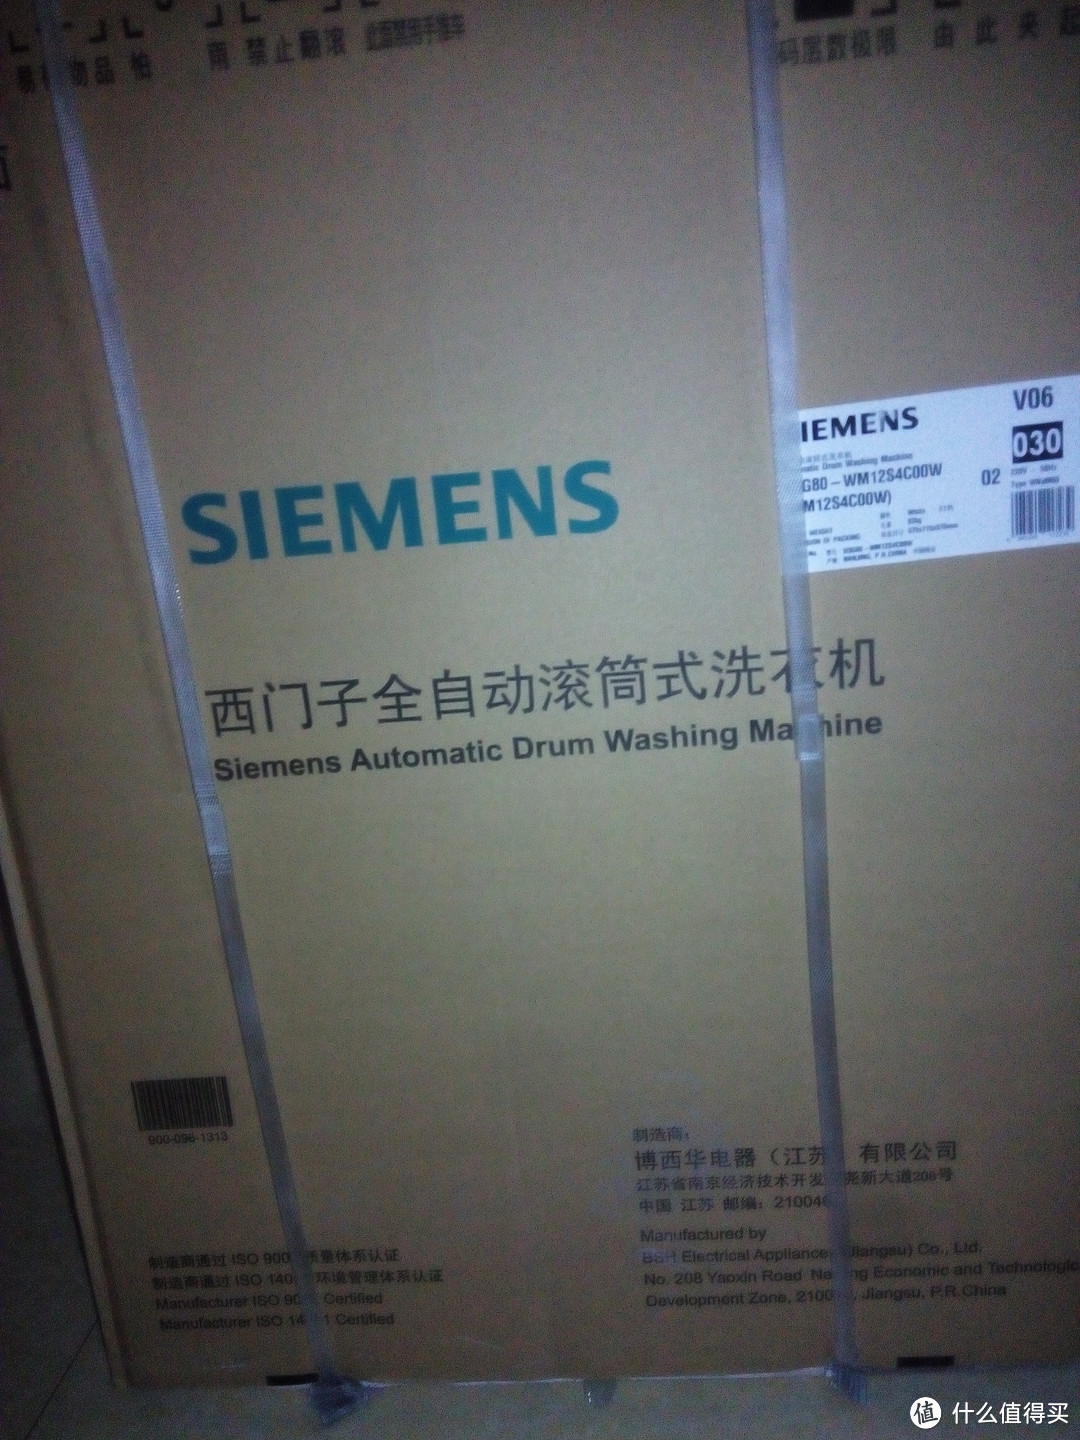 SIEMENS 西门子 XQG80-WM12S4C00W 变频滚筒洗衣机开箱